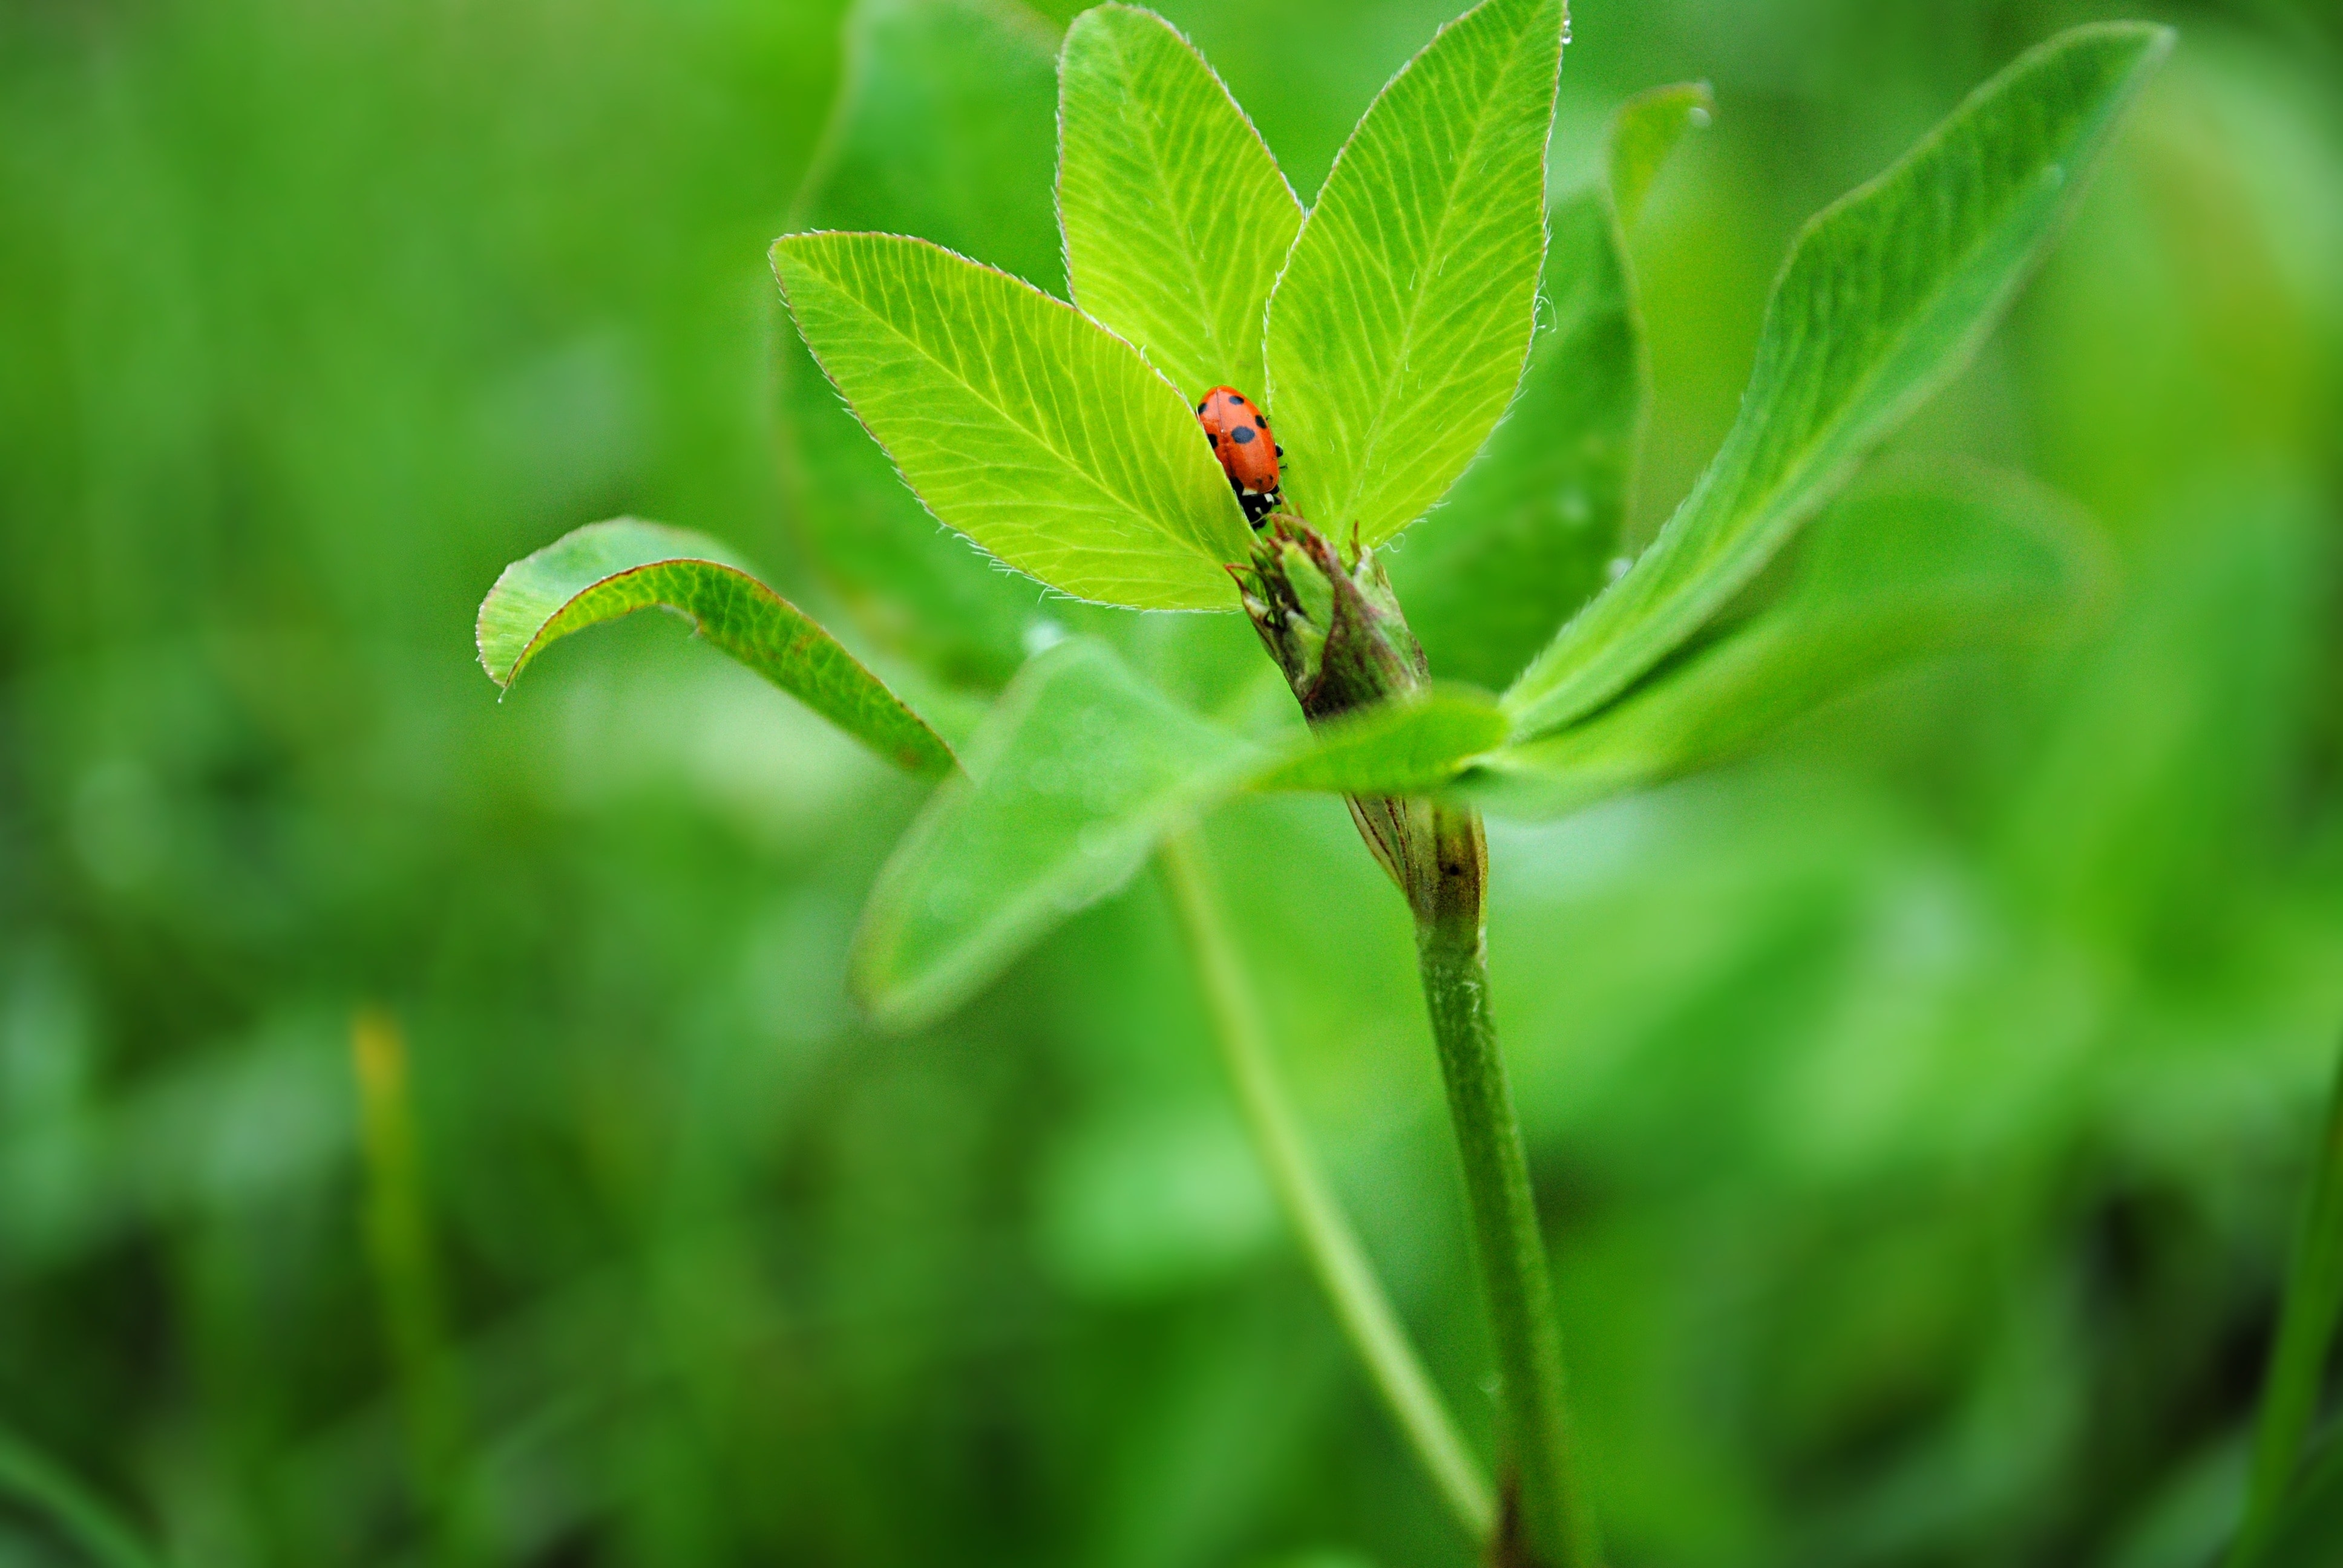 Ladybug, Spring, Nature, Insect, green color, leaf